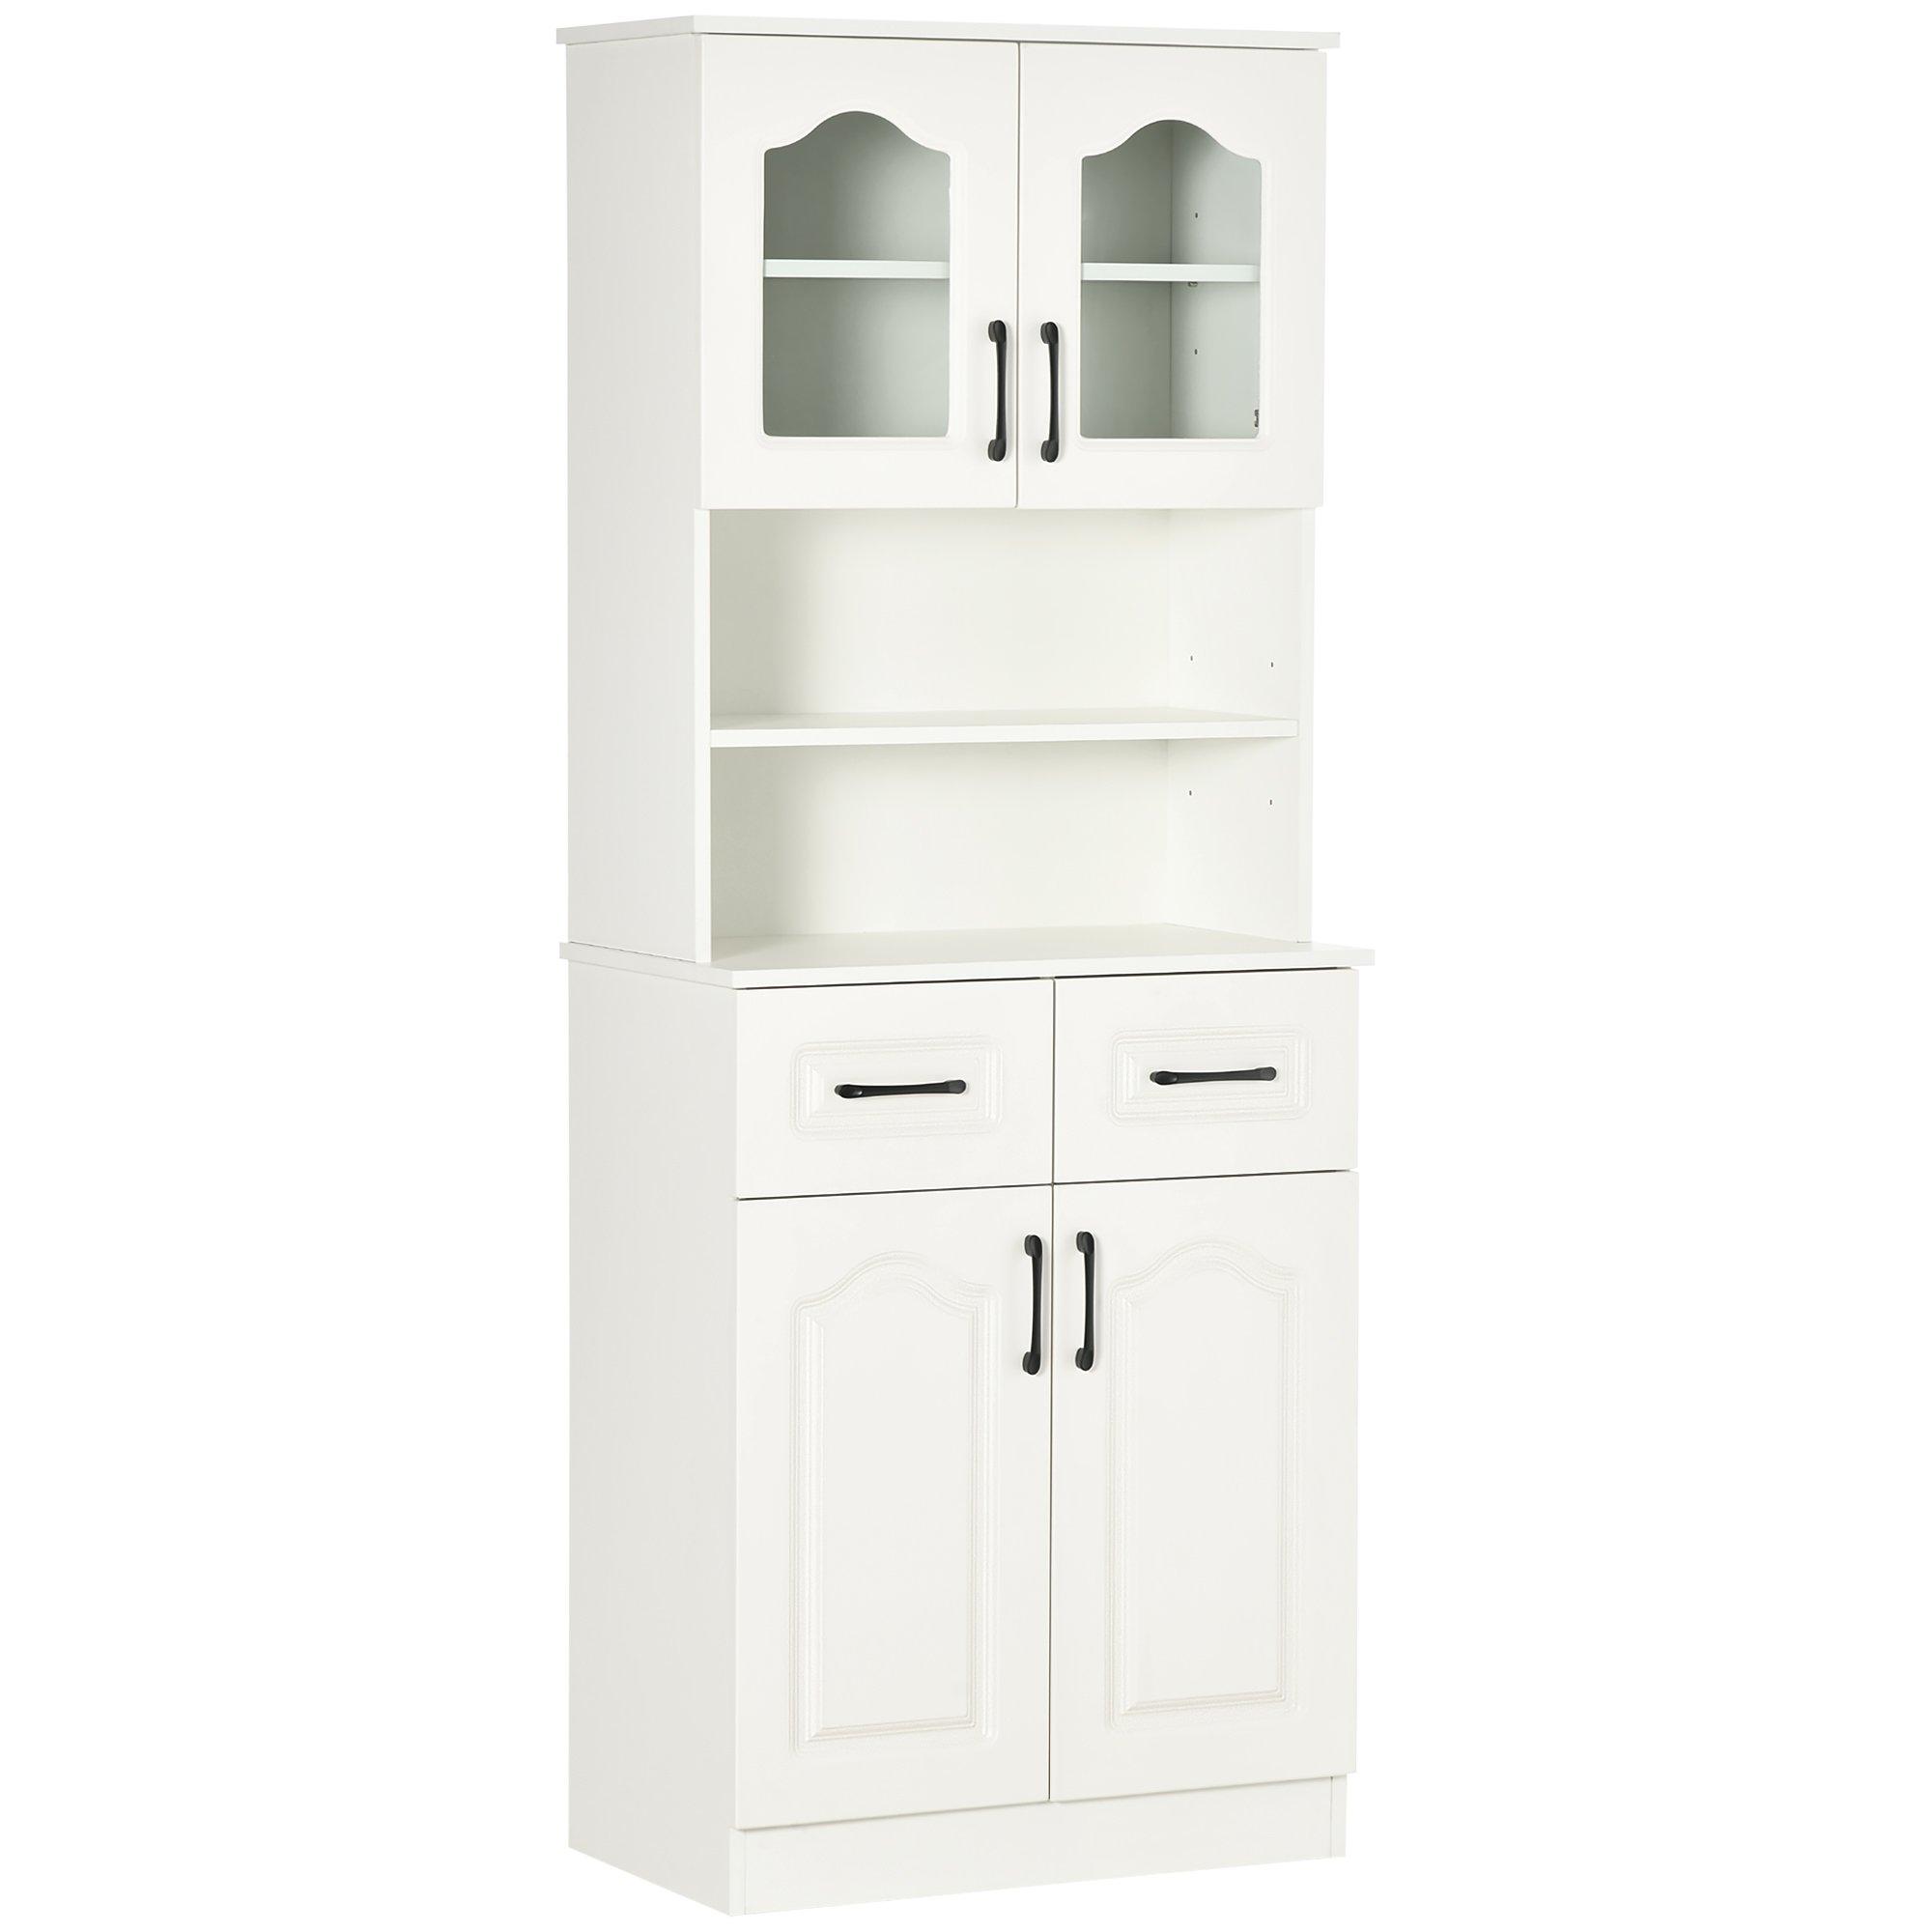 168cm Kitchen Cupboard Storage Cabinet   Shelves & Drawers